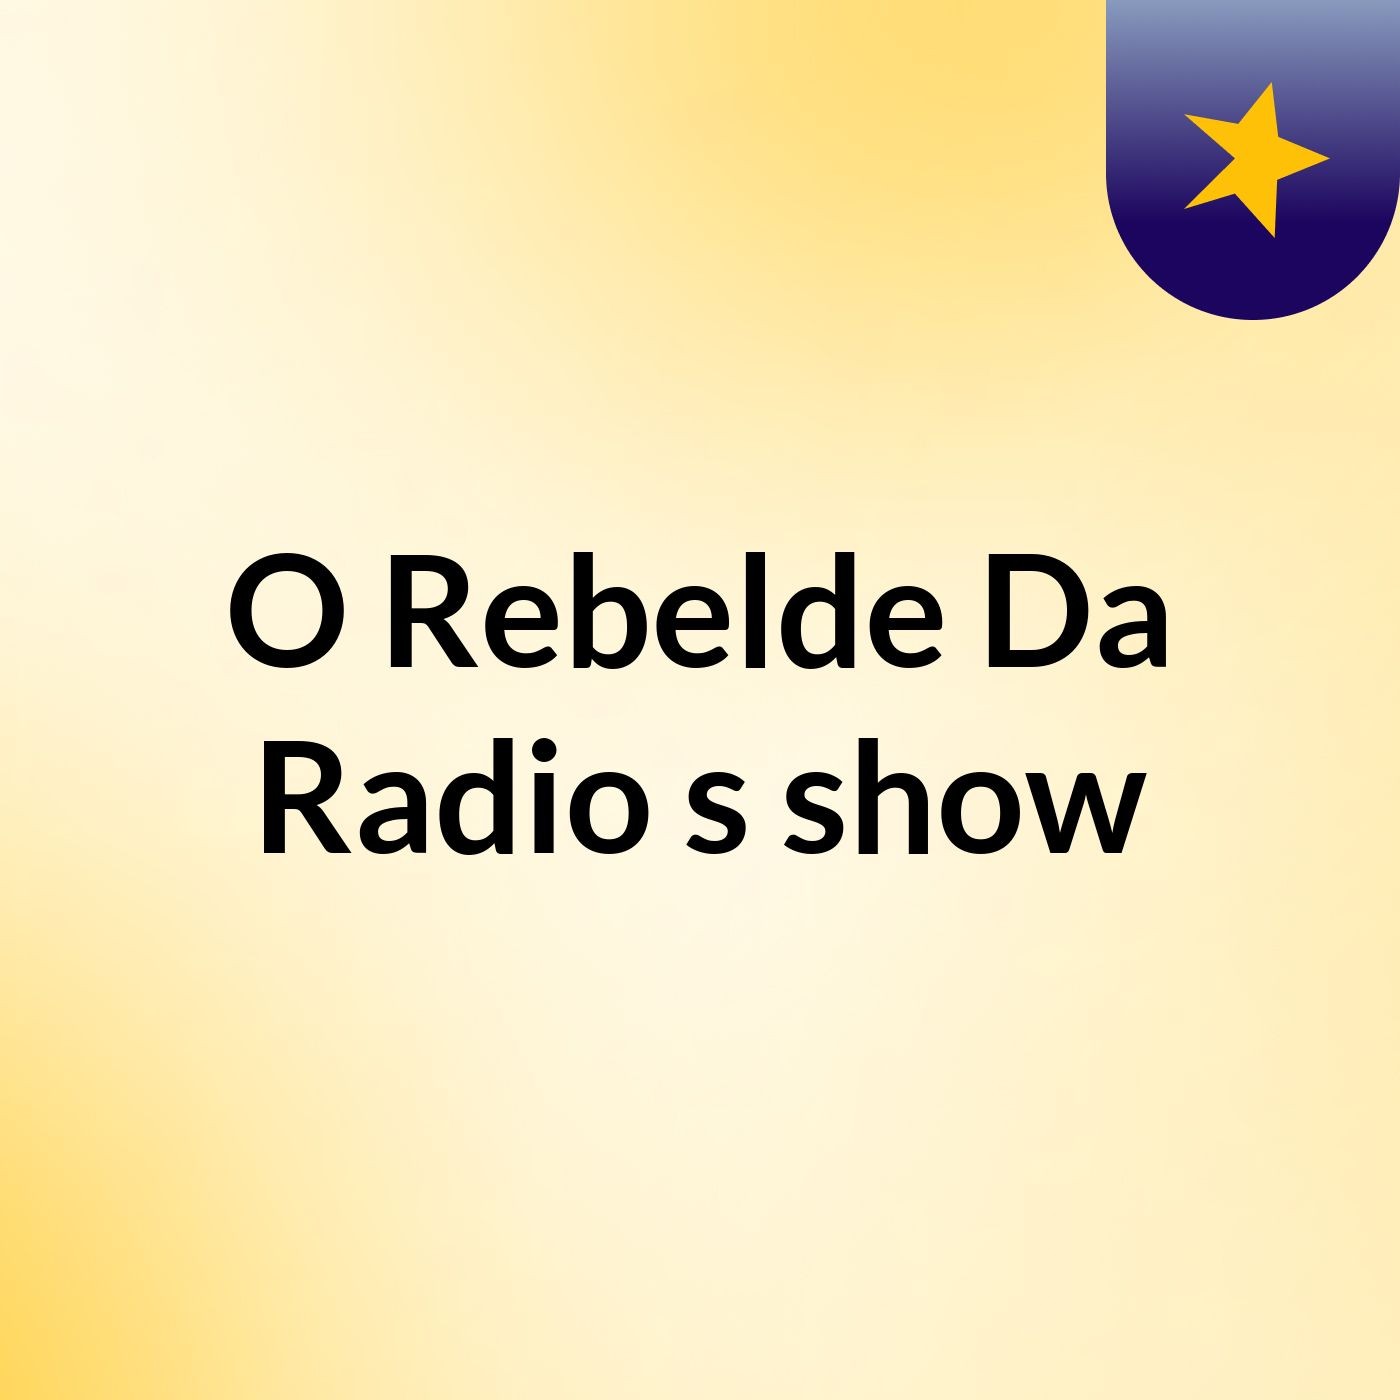 O Rebelde Da Radio's show